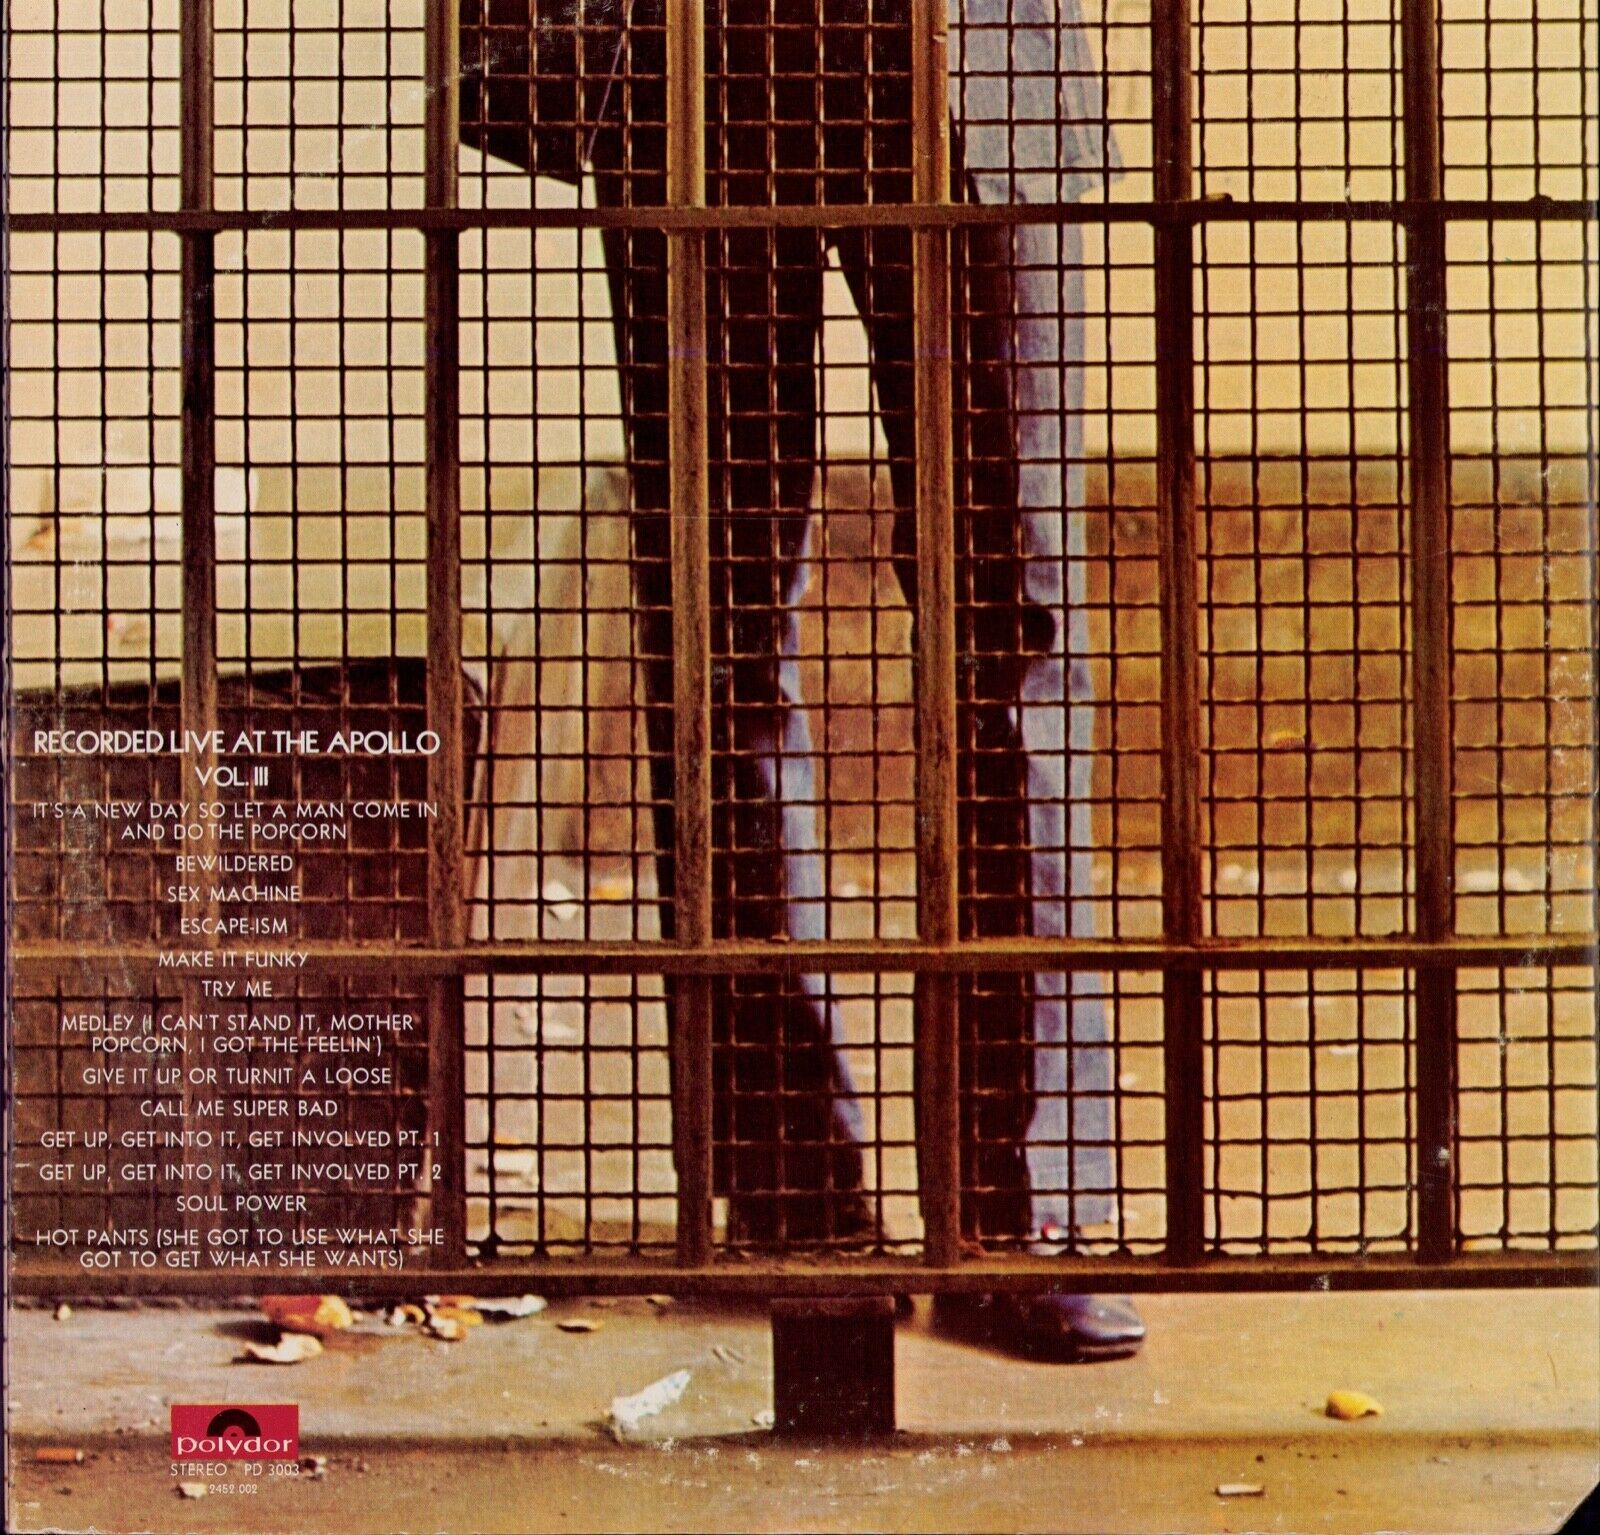 James Brown ‎- Revolution Of The Mind Vinyl 2LP